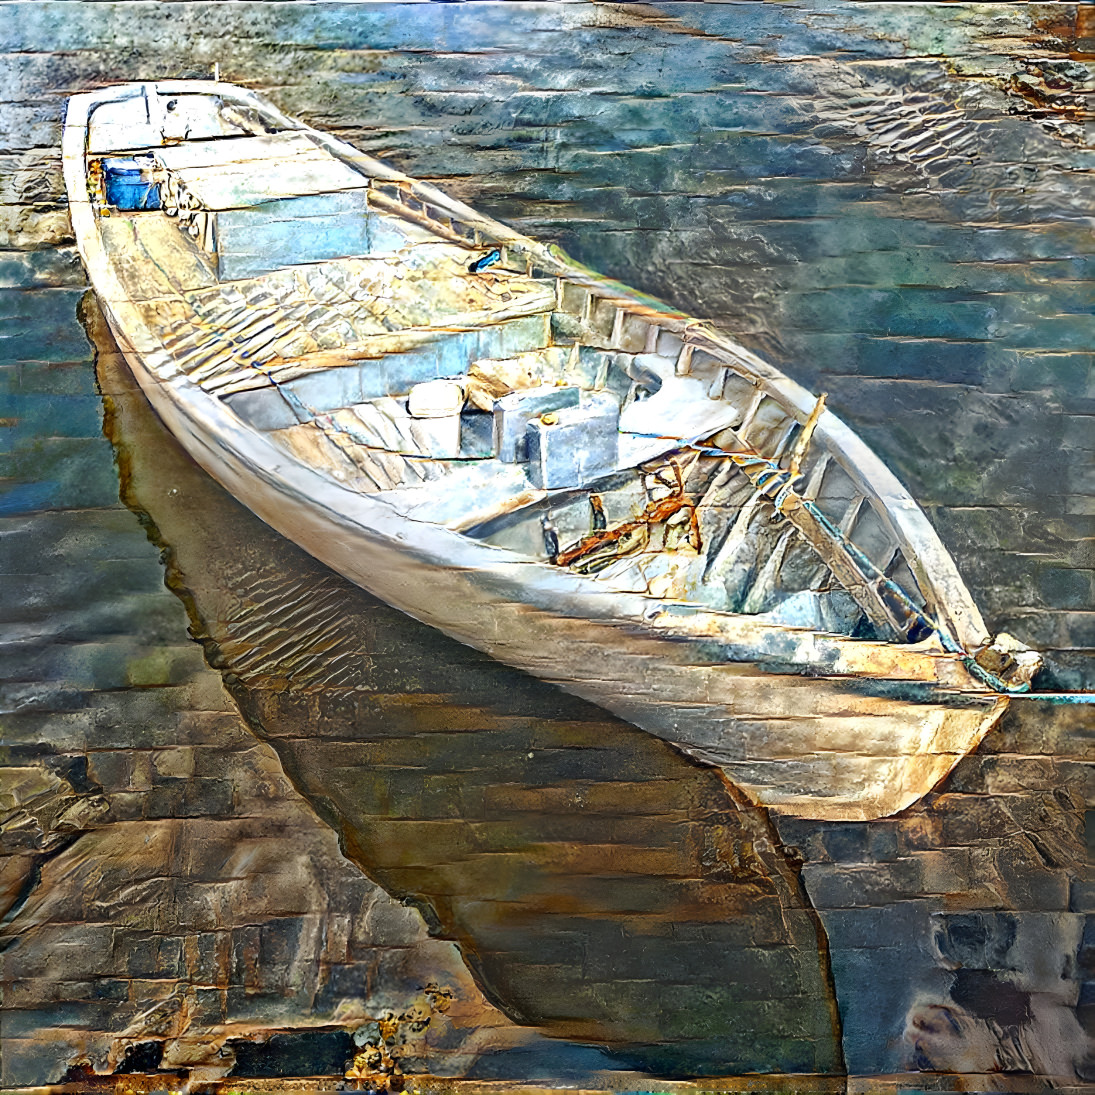 the dinghy